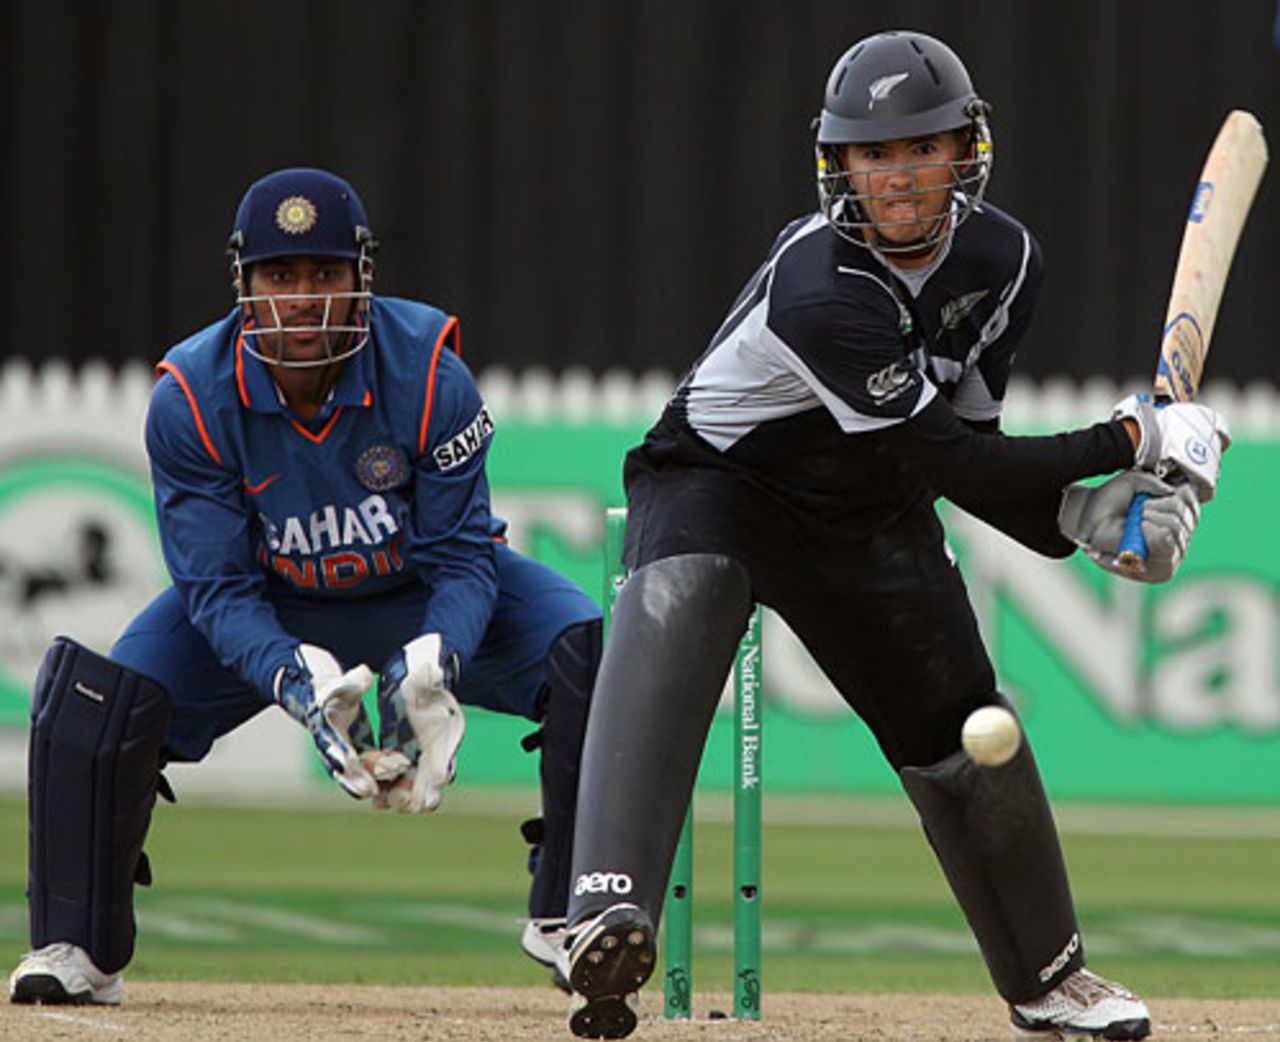 Peter McGlashan scored a quickfire 56, New Zealand v India, 4th ODI, Hamilton, March 11, 2009